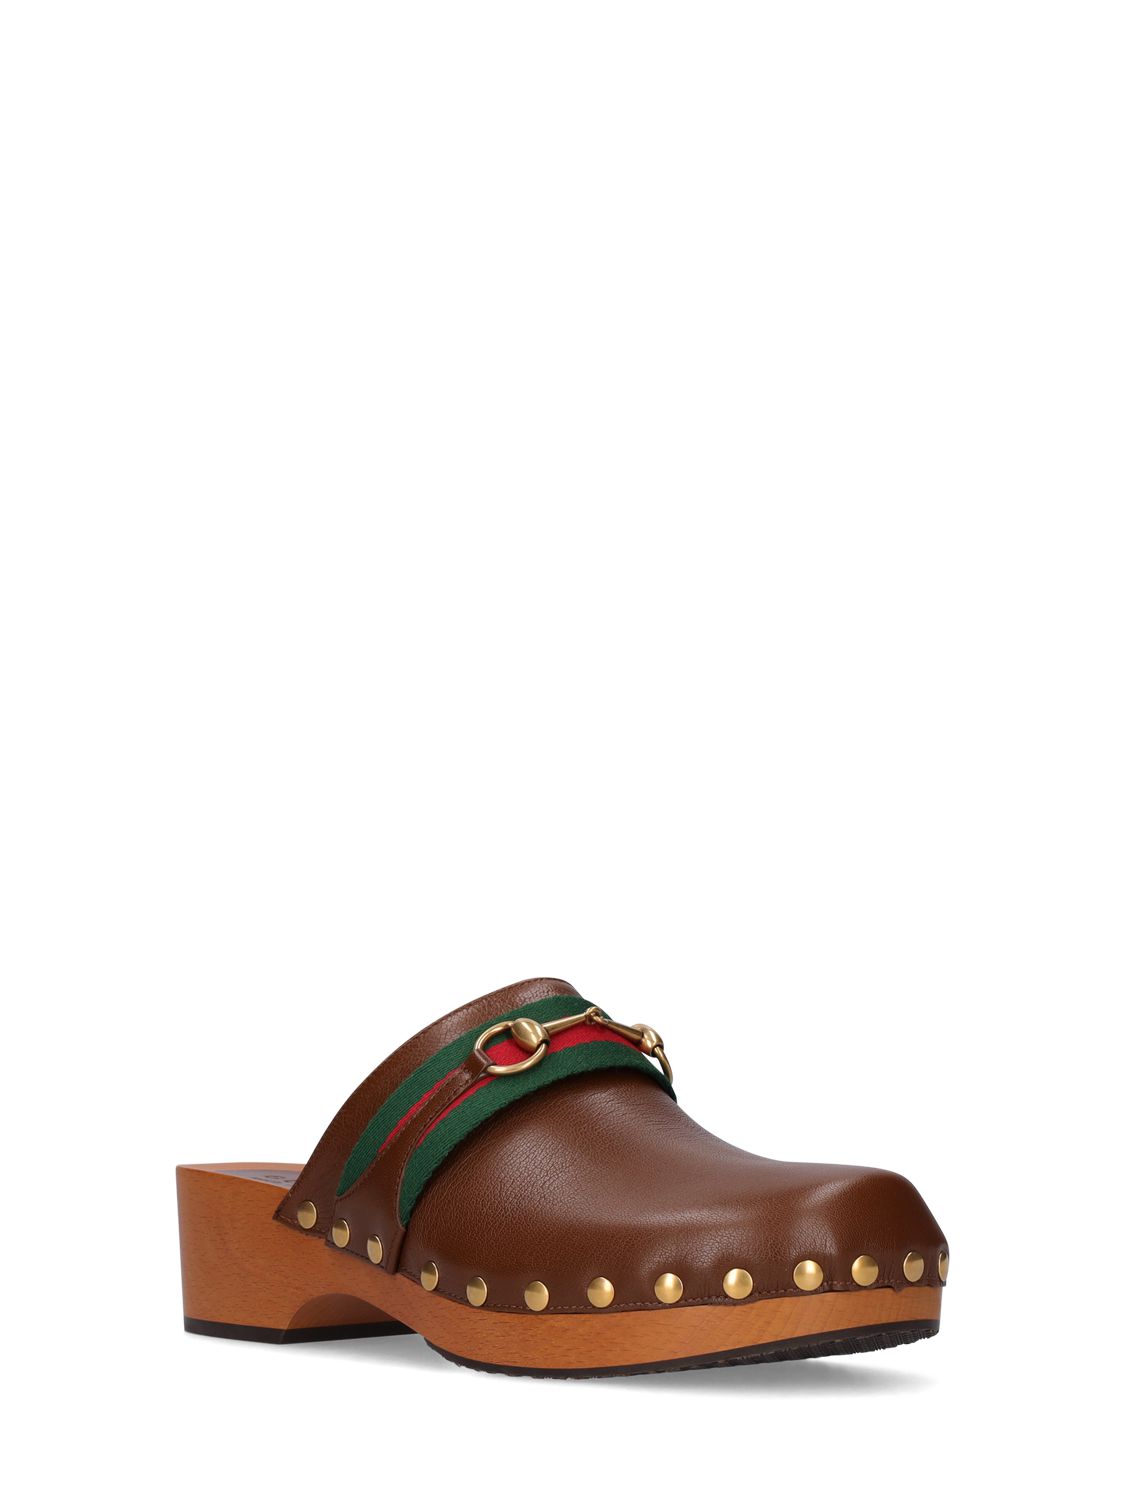  Gucci Leather Slide Sandals 